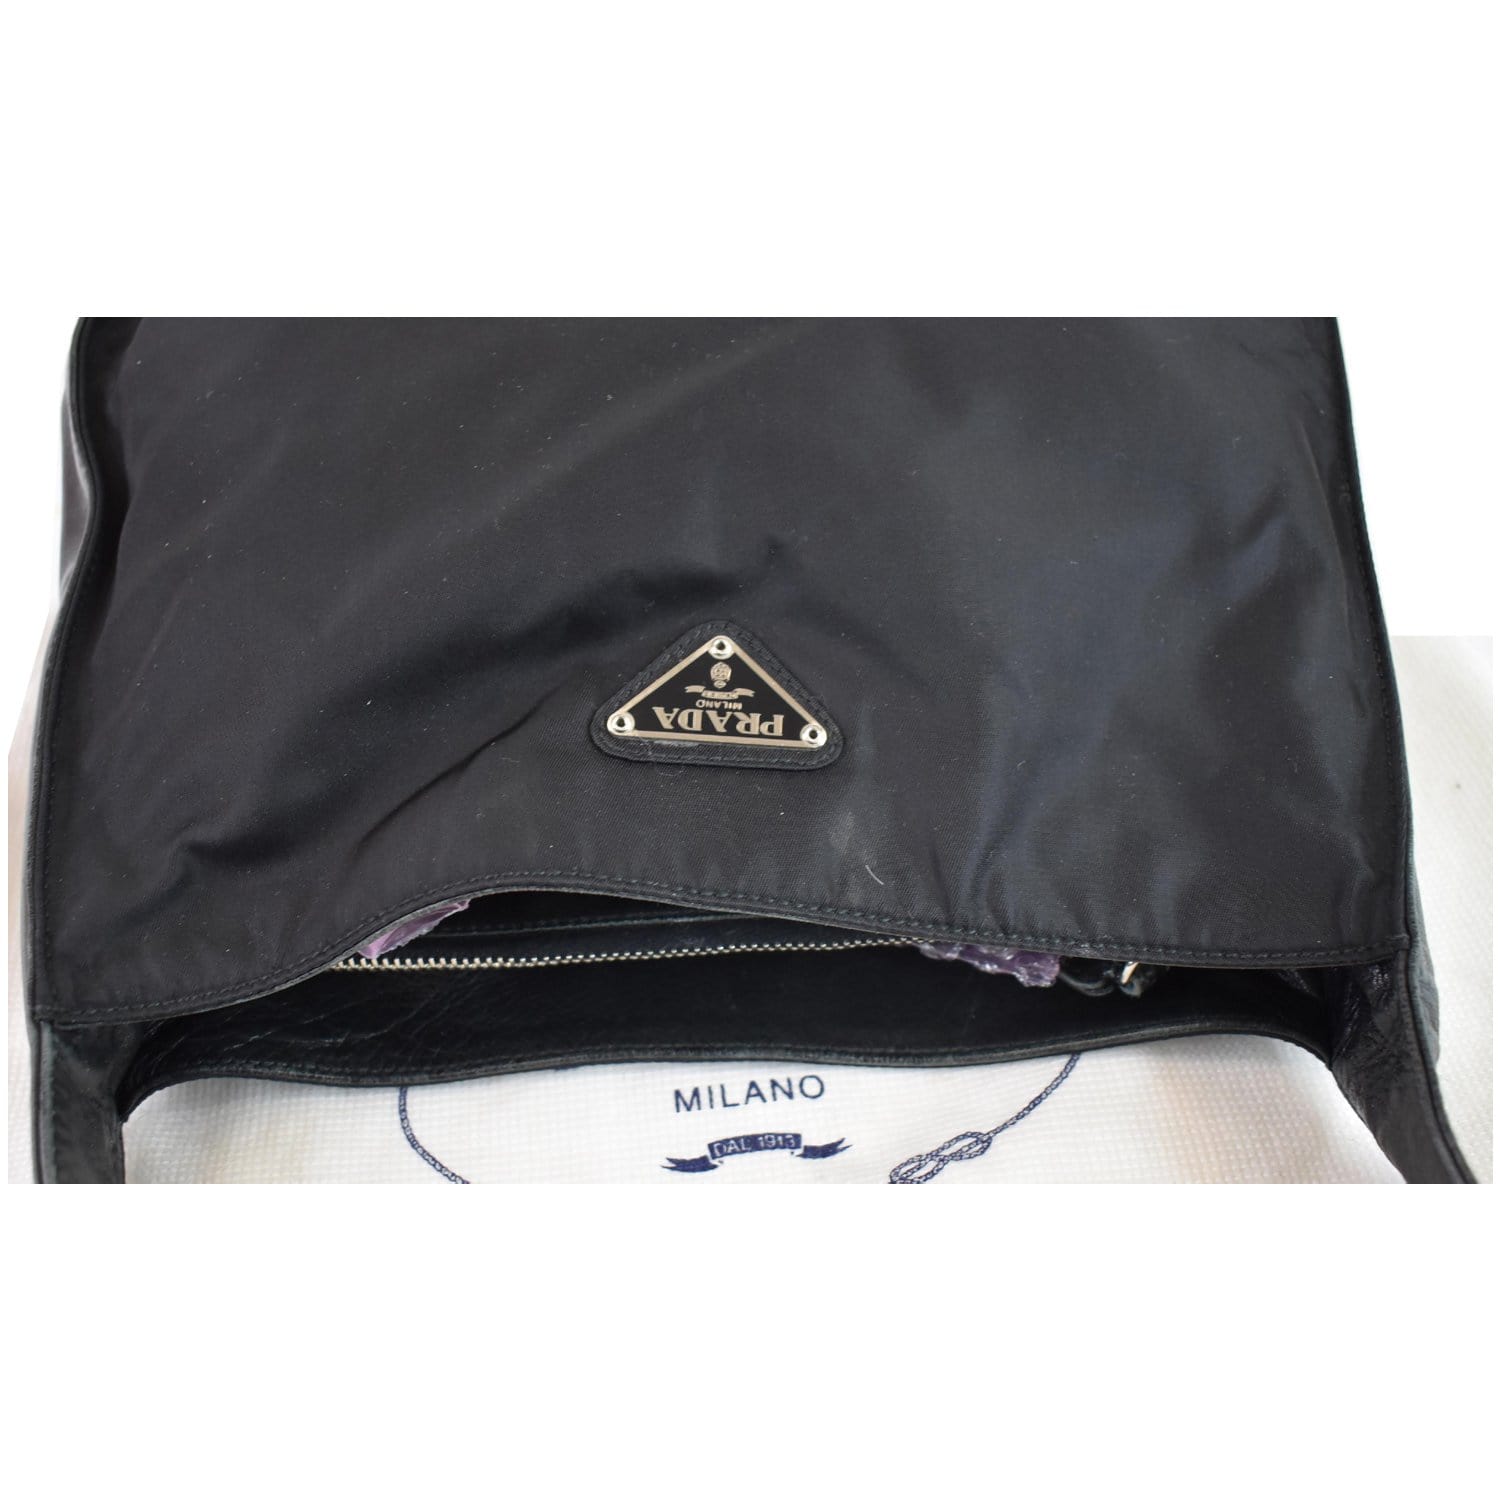 Prada, Bags, Authentic Prada Nylon Leather Black And White Handbag